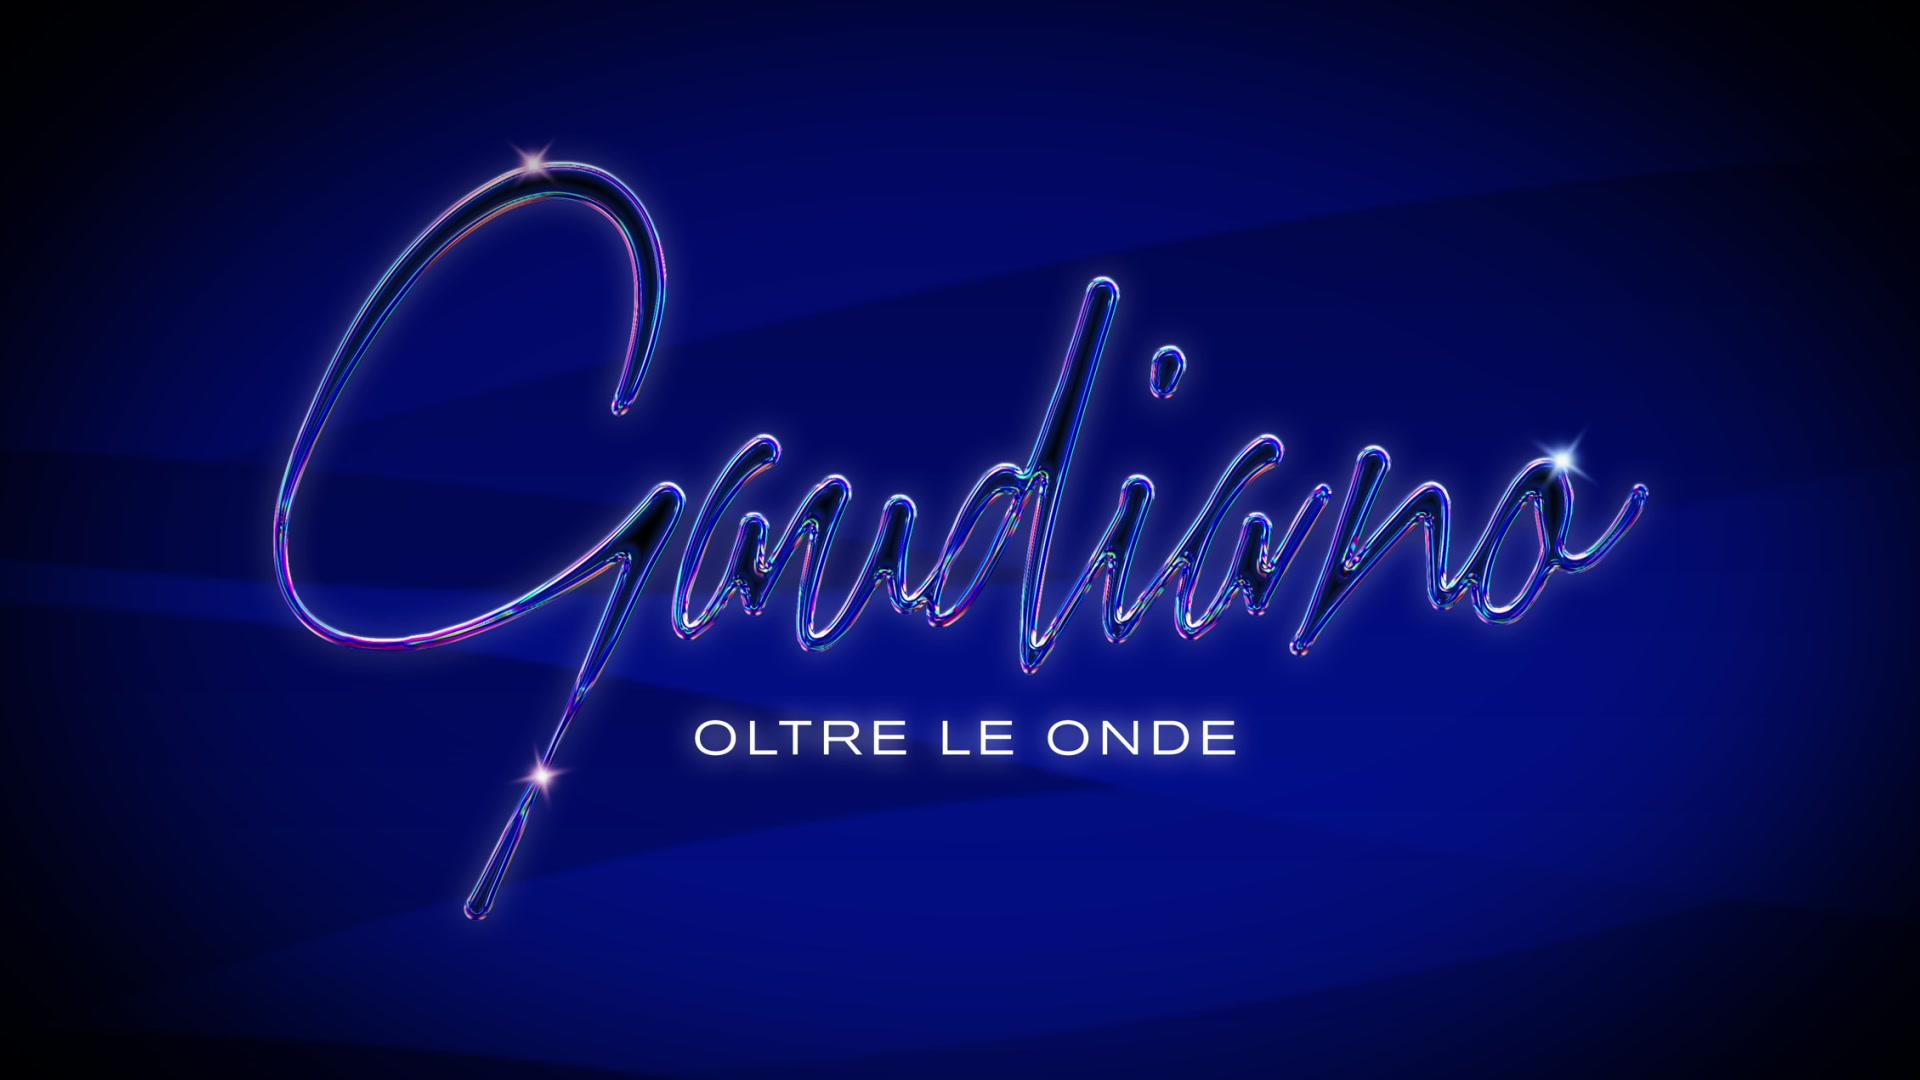 Gaudiano - OLTRE LE ONDE (Lyric Video)